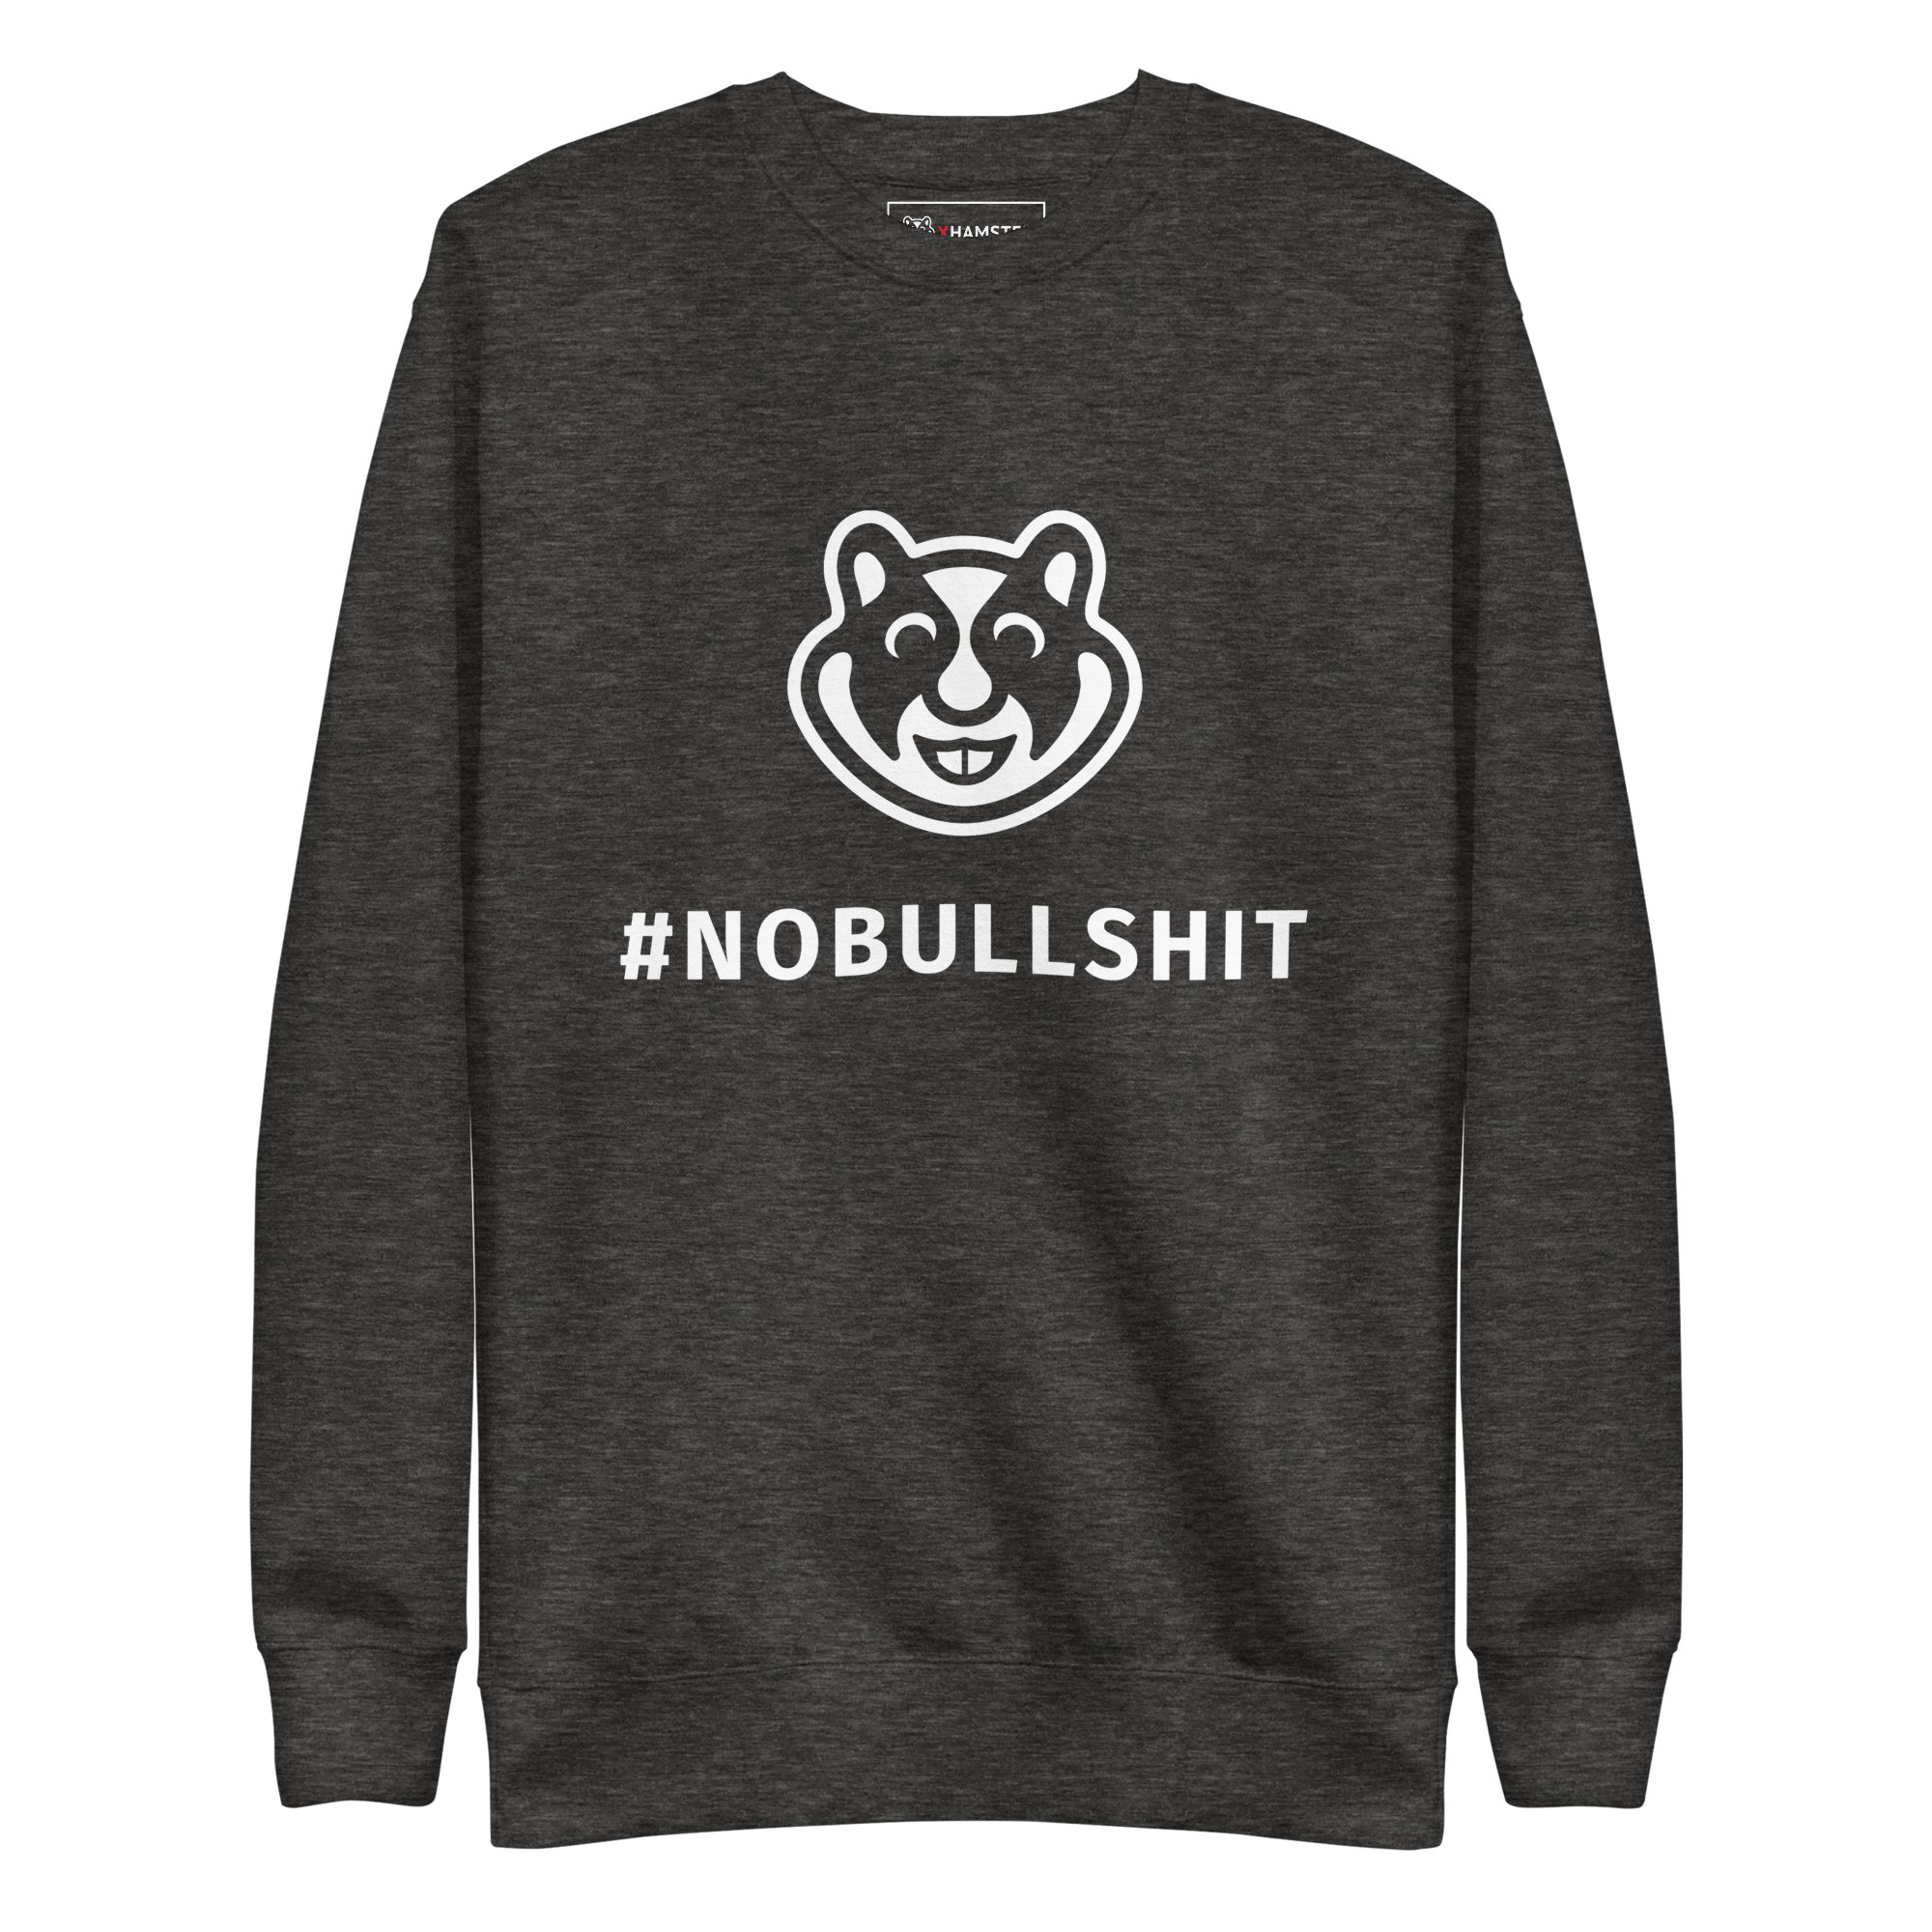 xHamster Unisex Sweatshirt #nobullshit Black/Charcoal Grey